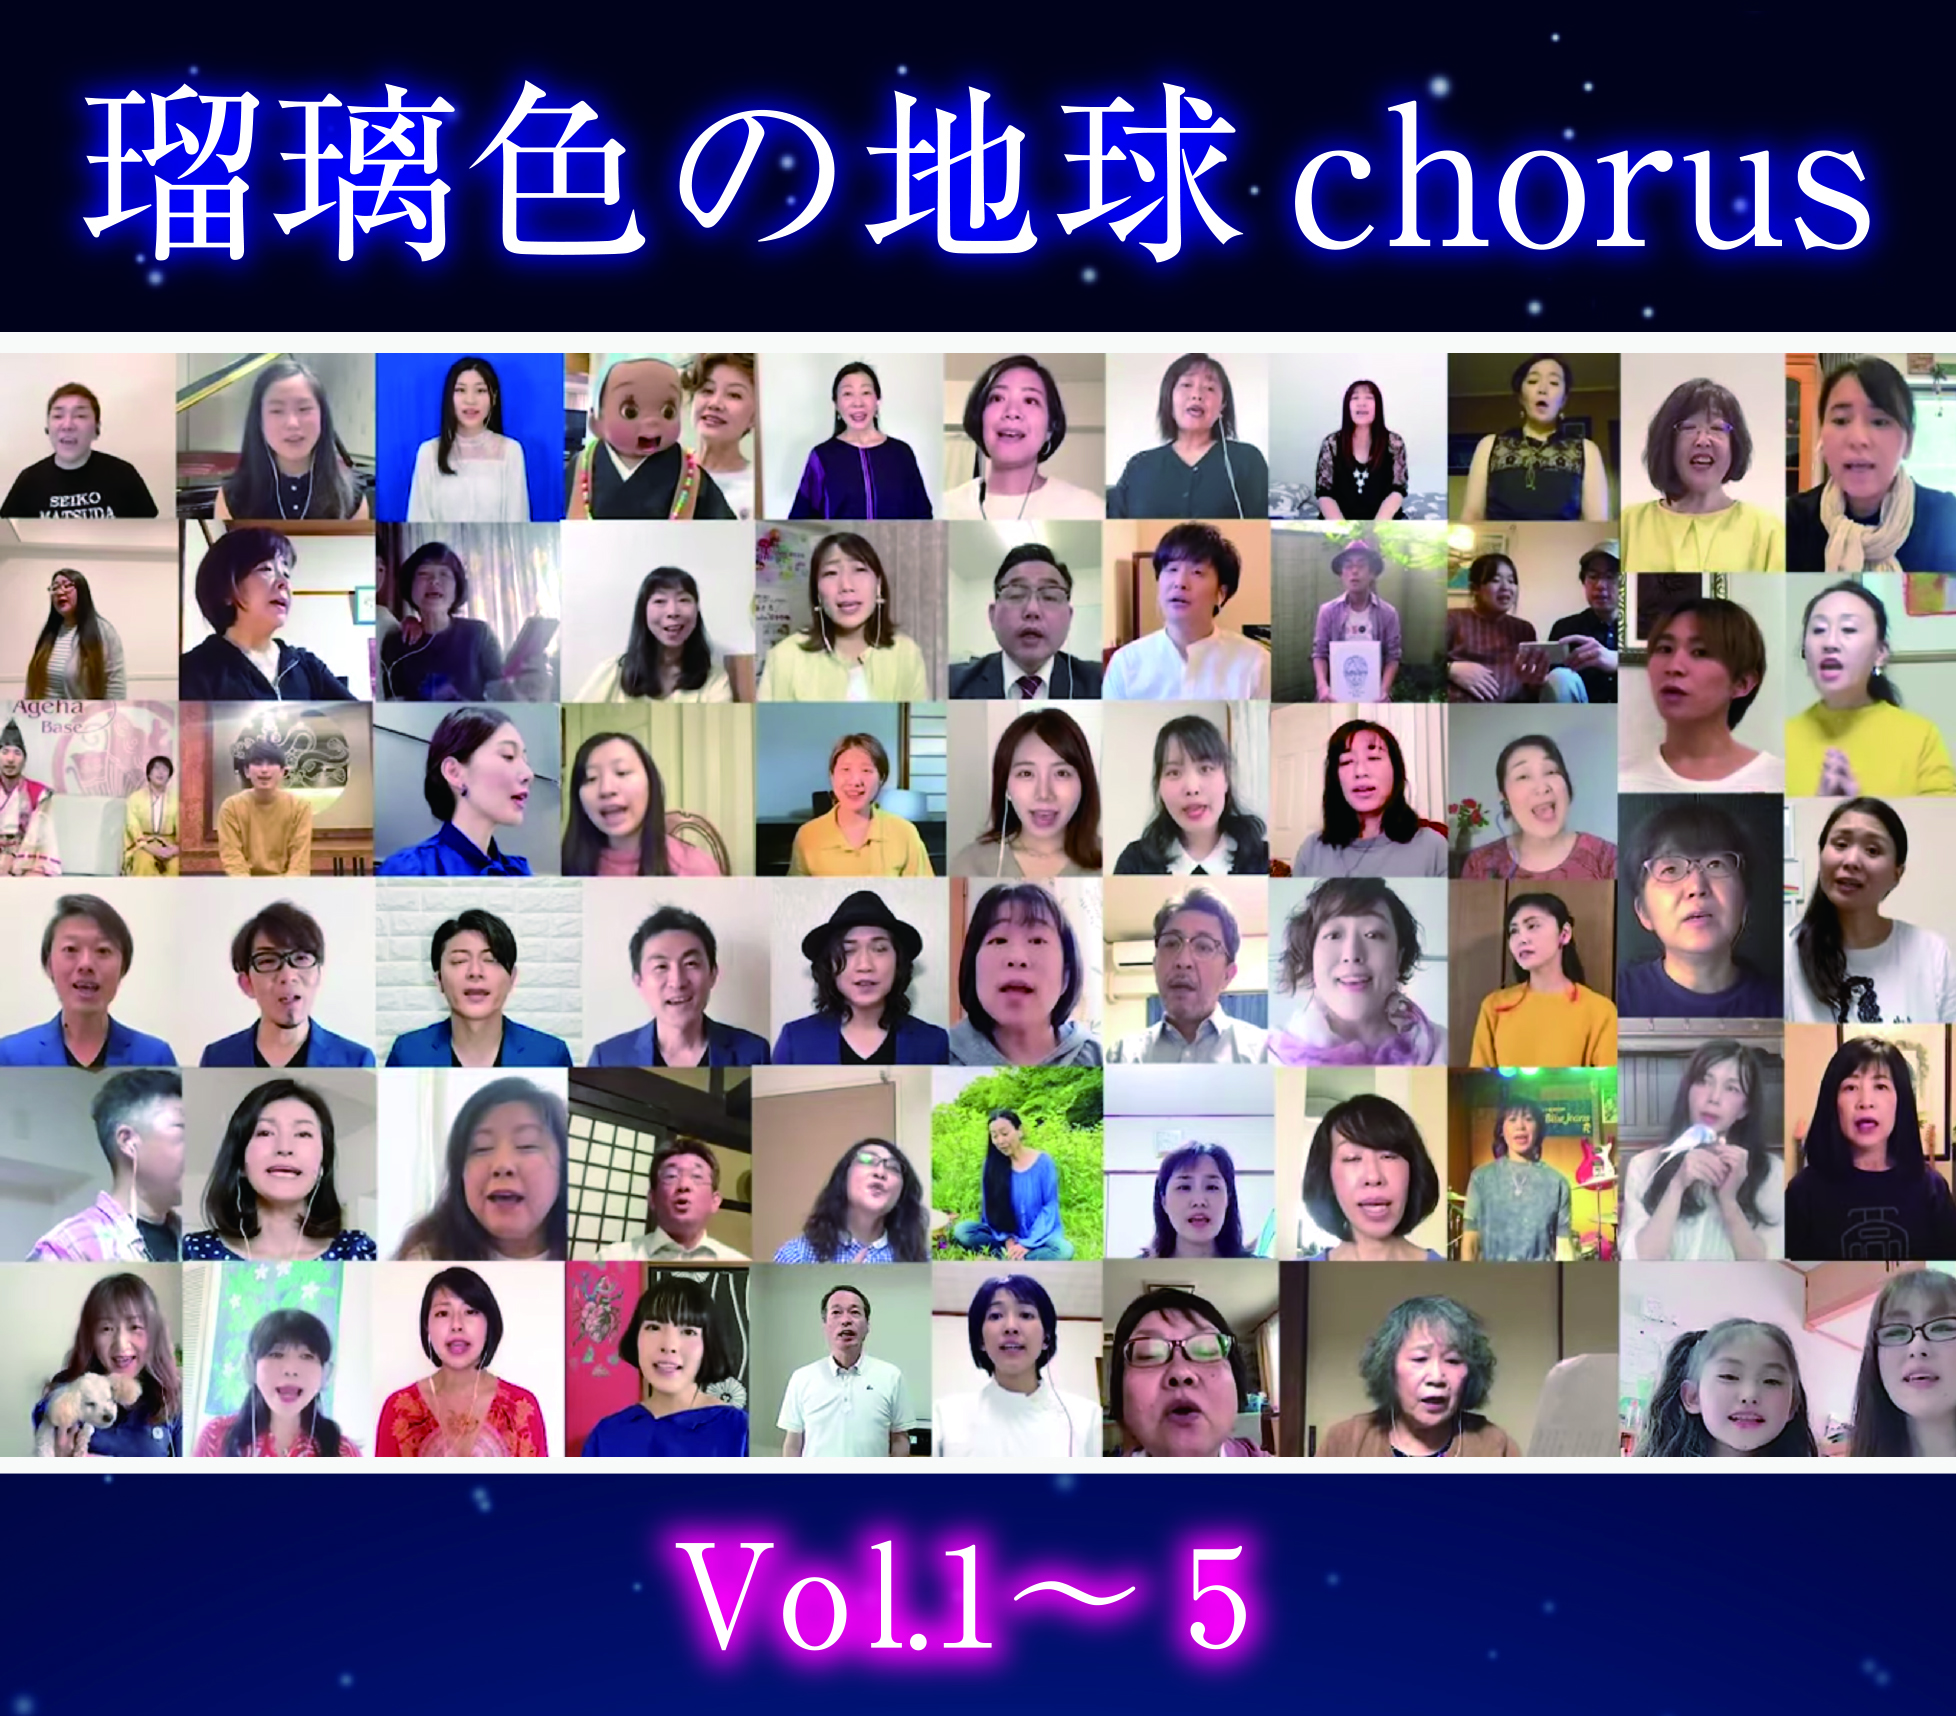 瑠璃色の地球chorus Kobe Tv 神戸tv